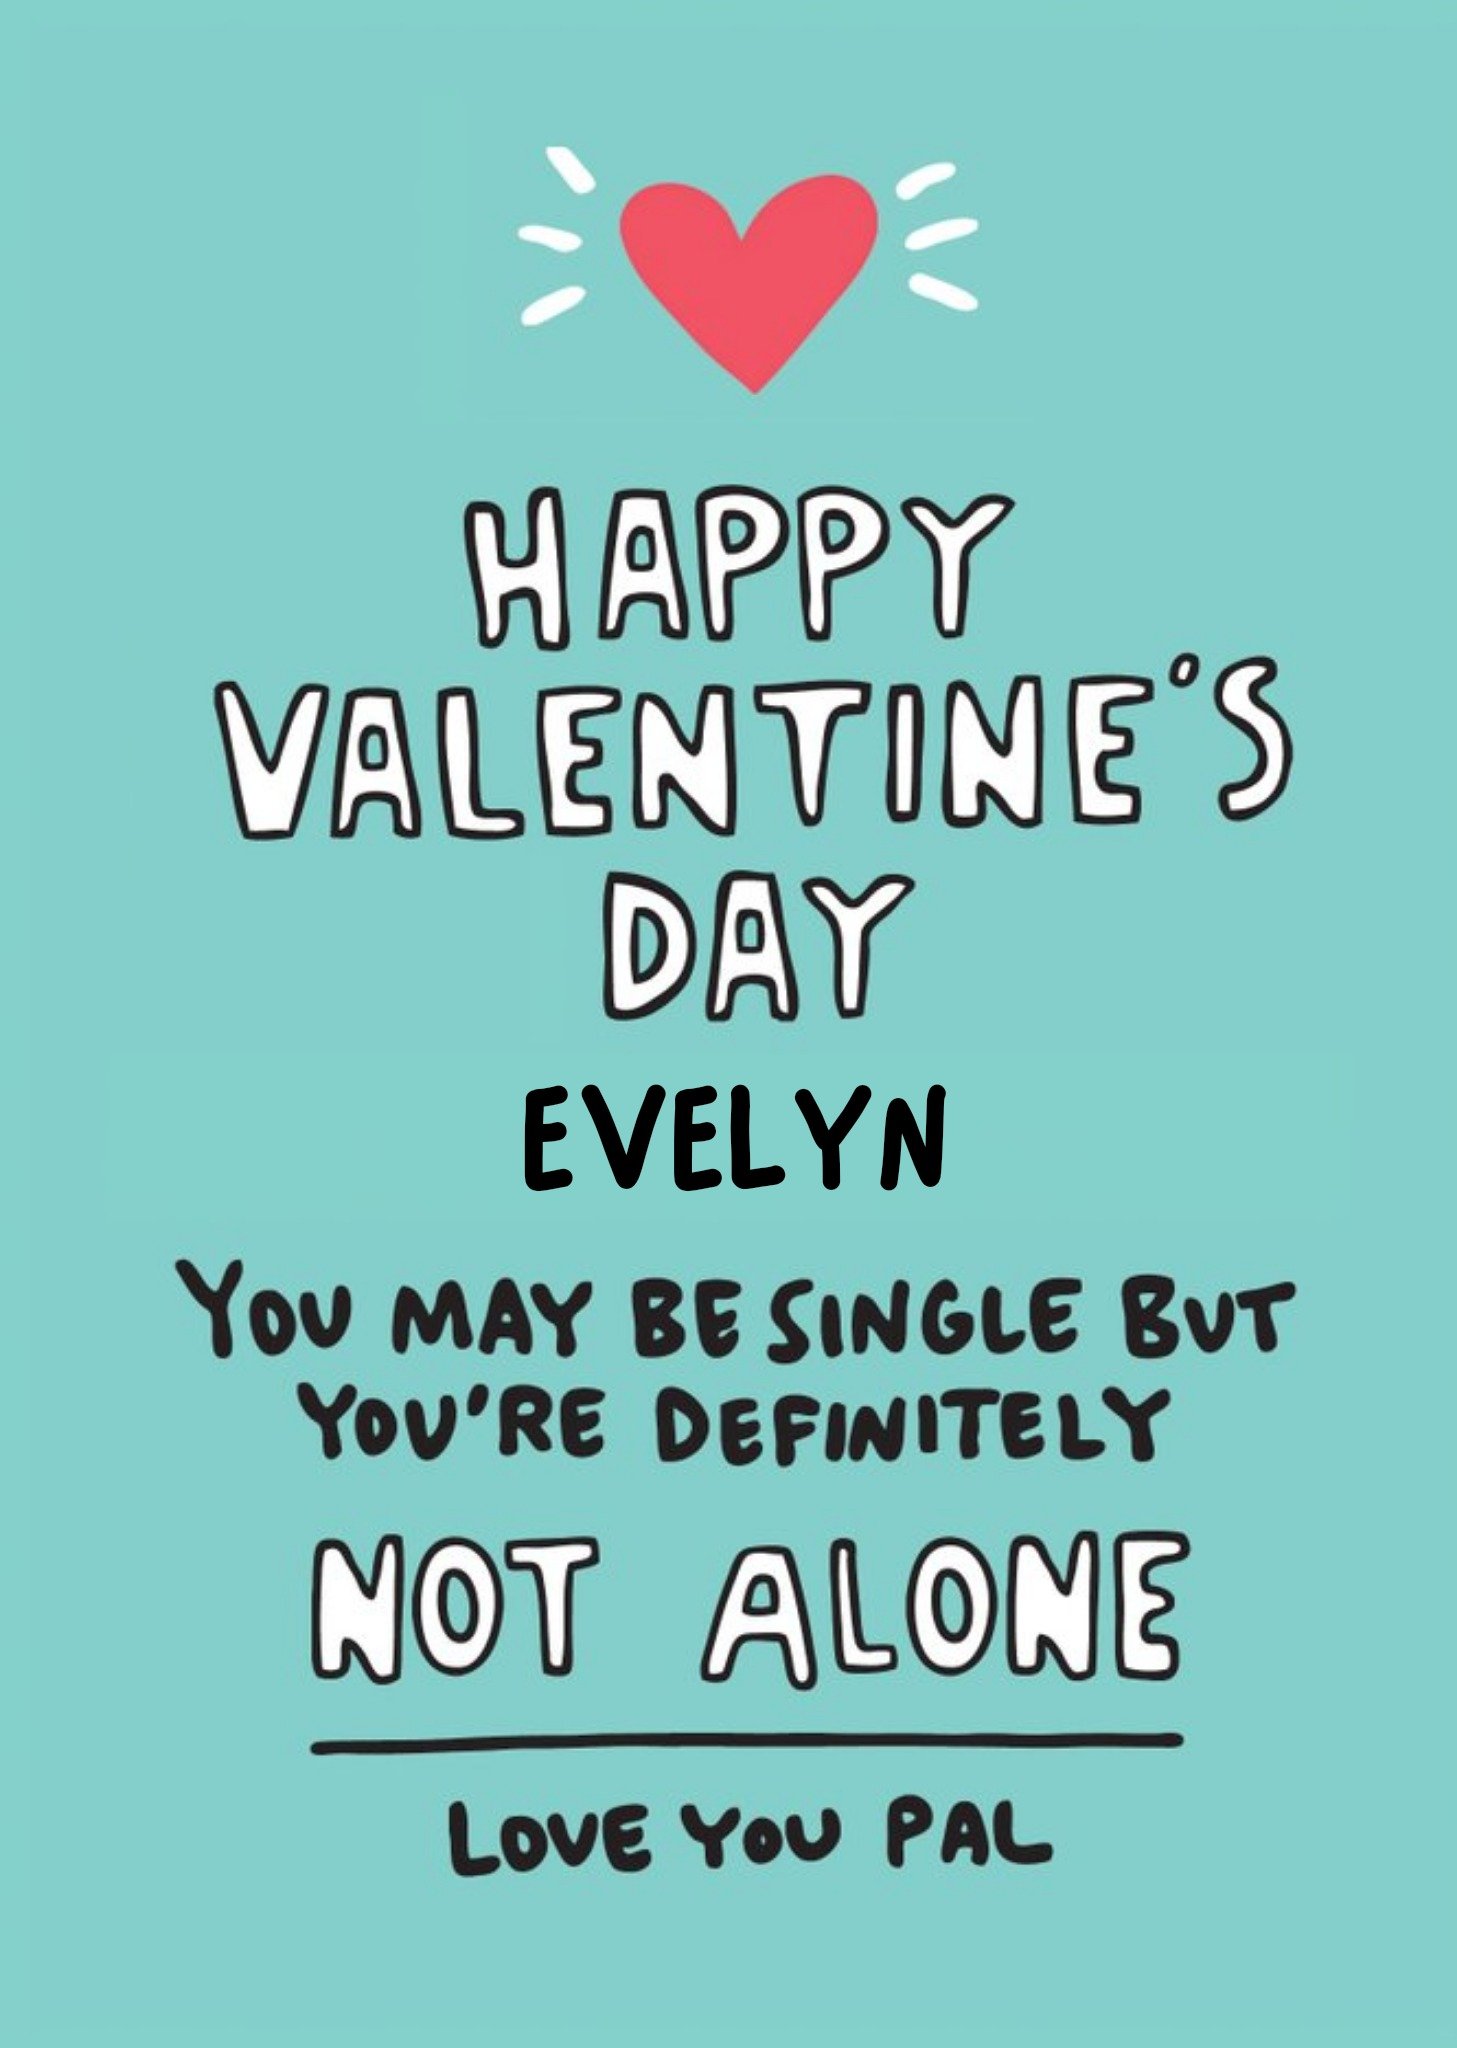 Moonpig Angela Chick Single Friend Valentine's Palentine's Galentine's Card, Large